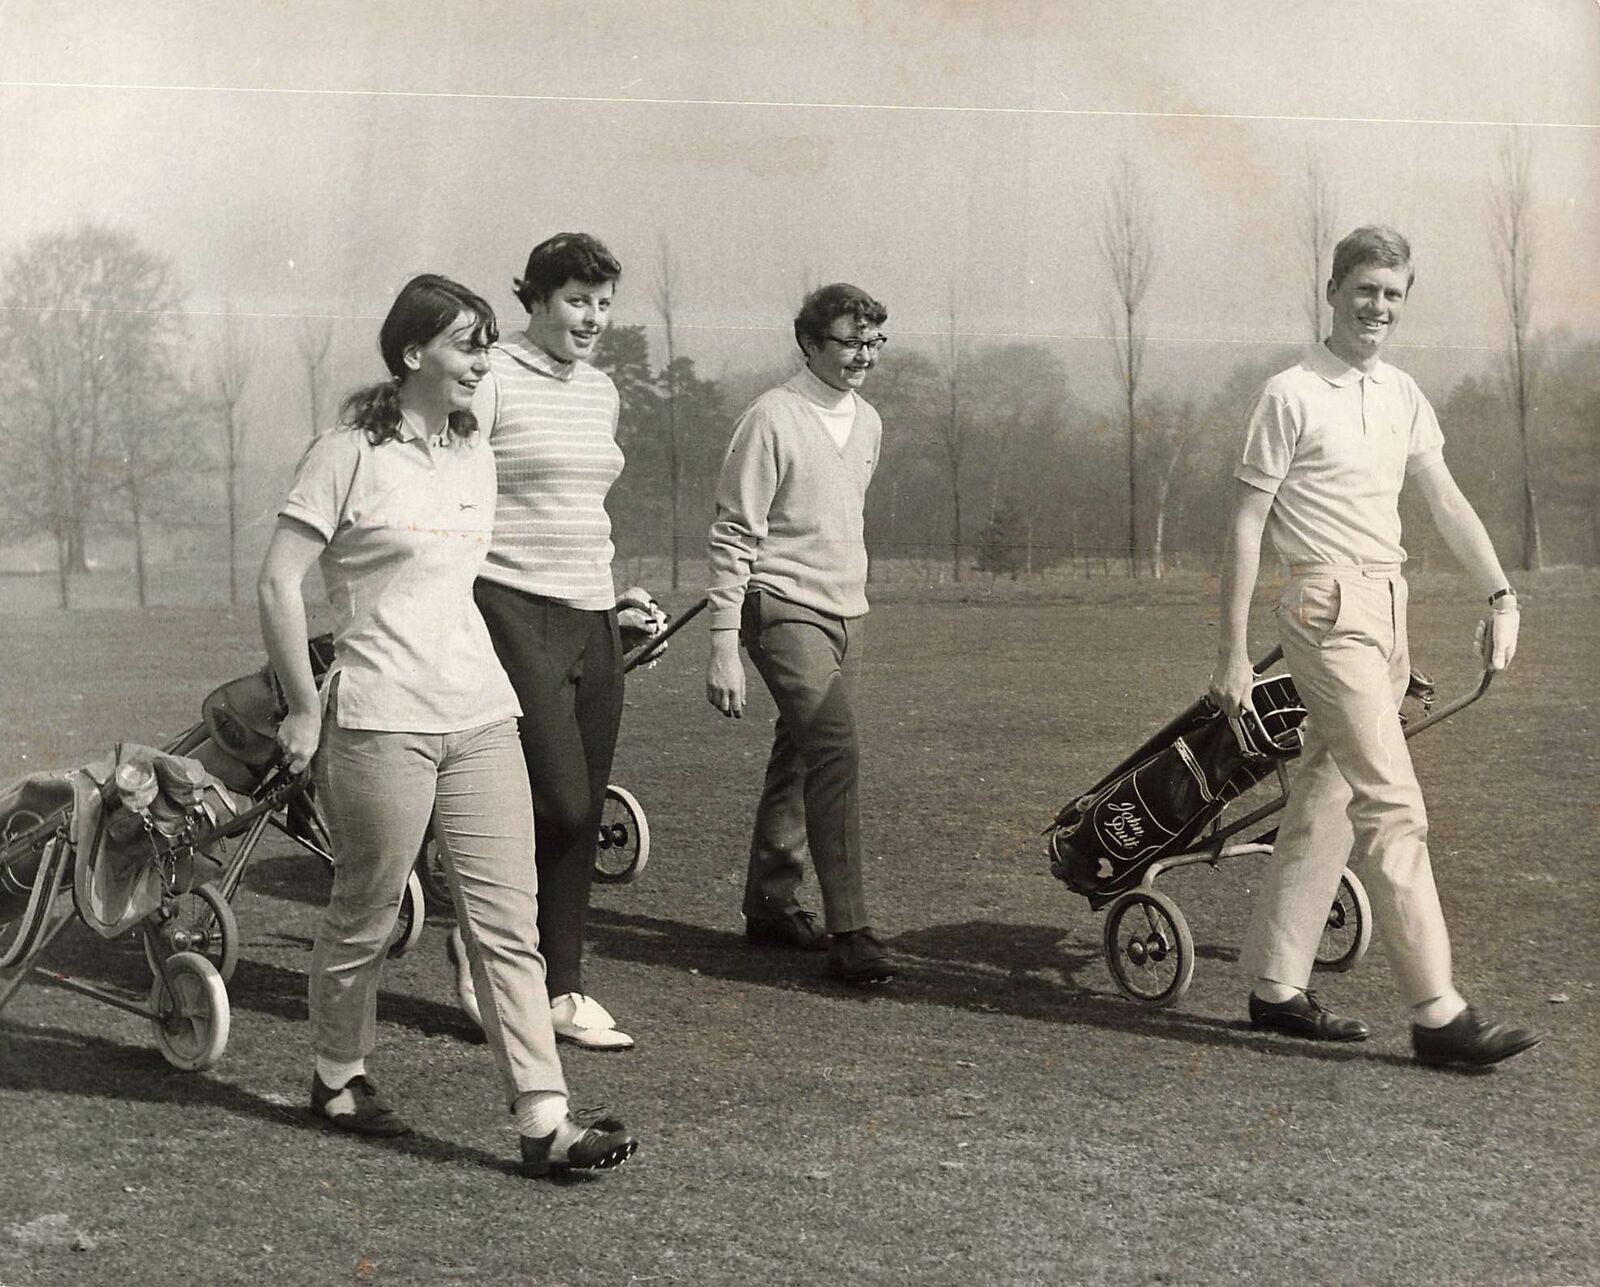 1969 Press Photo Carris Boys v LGU Girls Annual Golf Match Moor Park Golfing kg